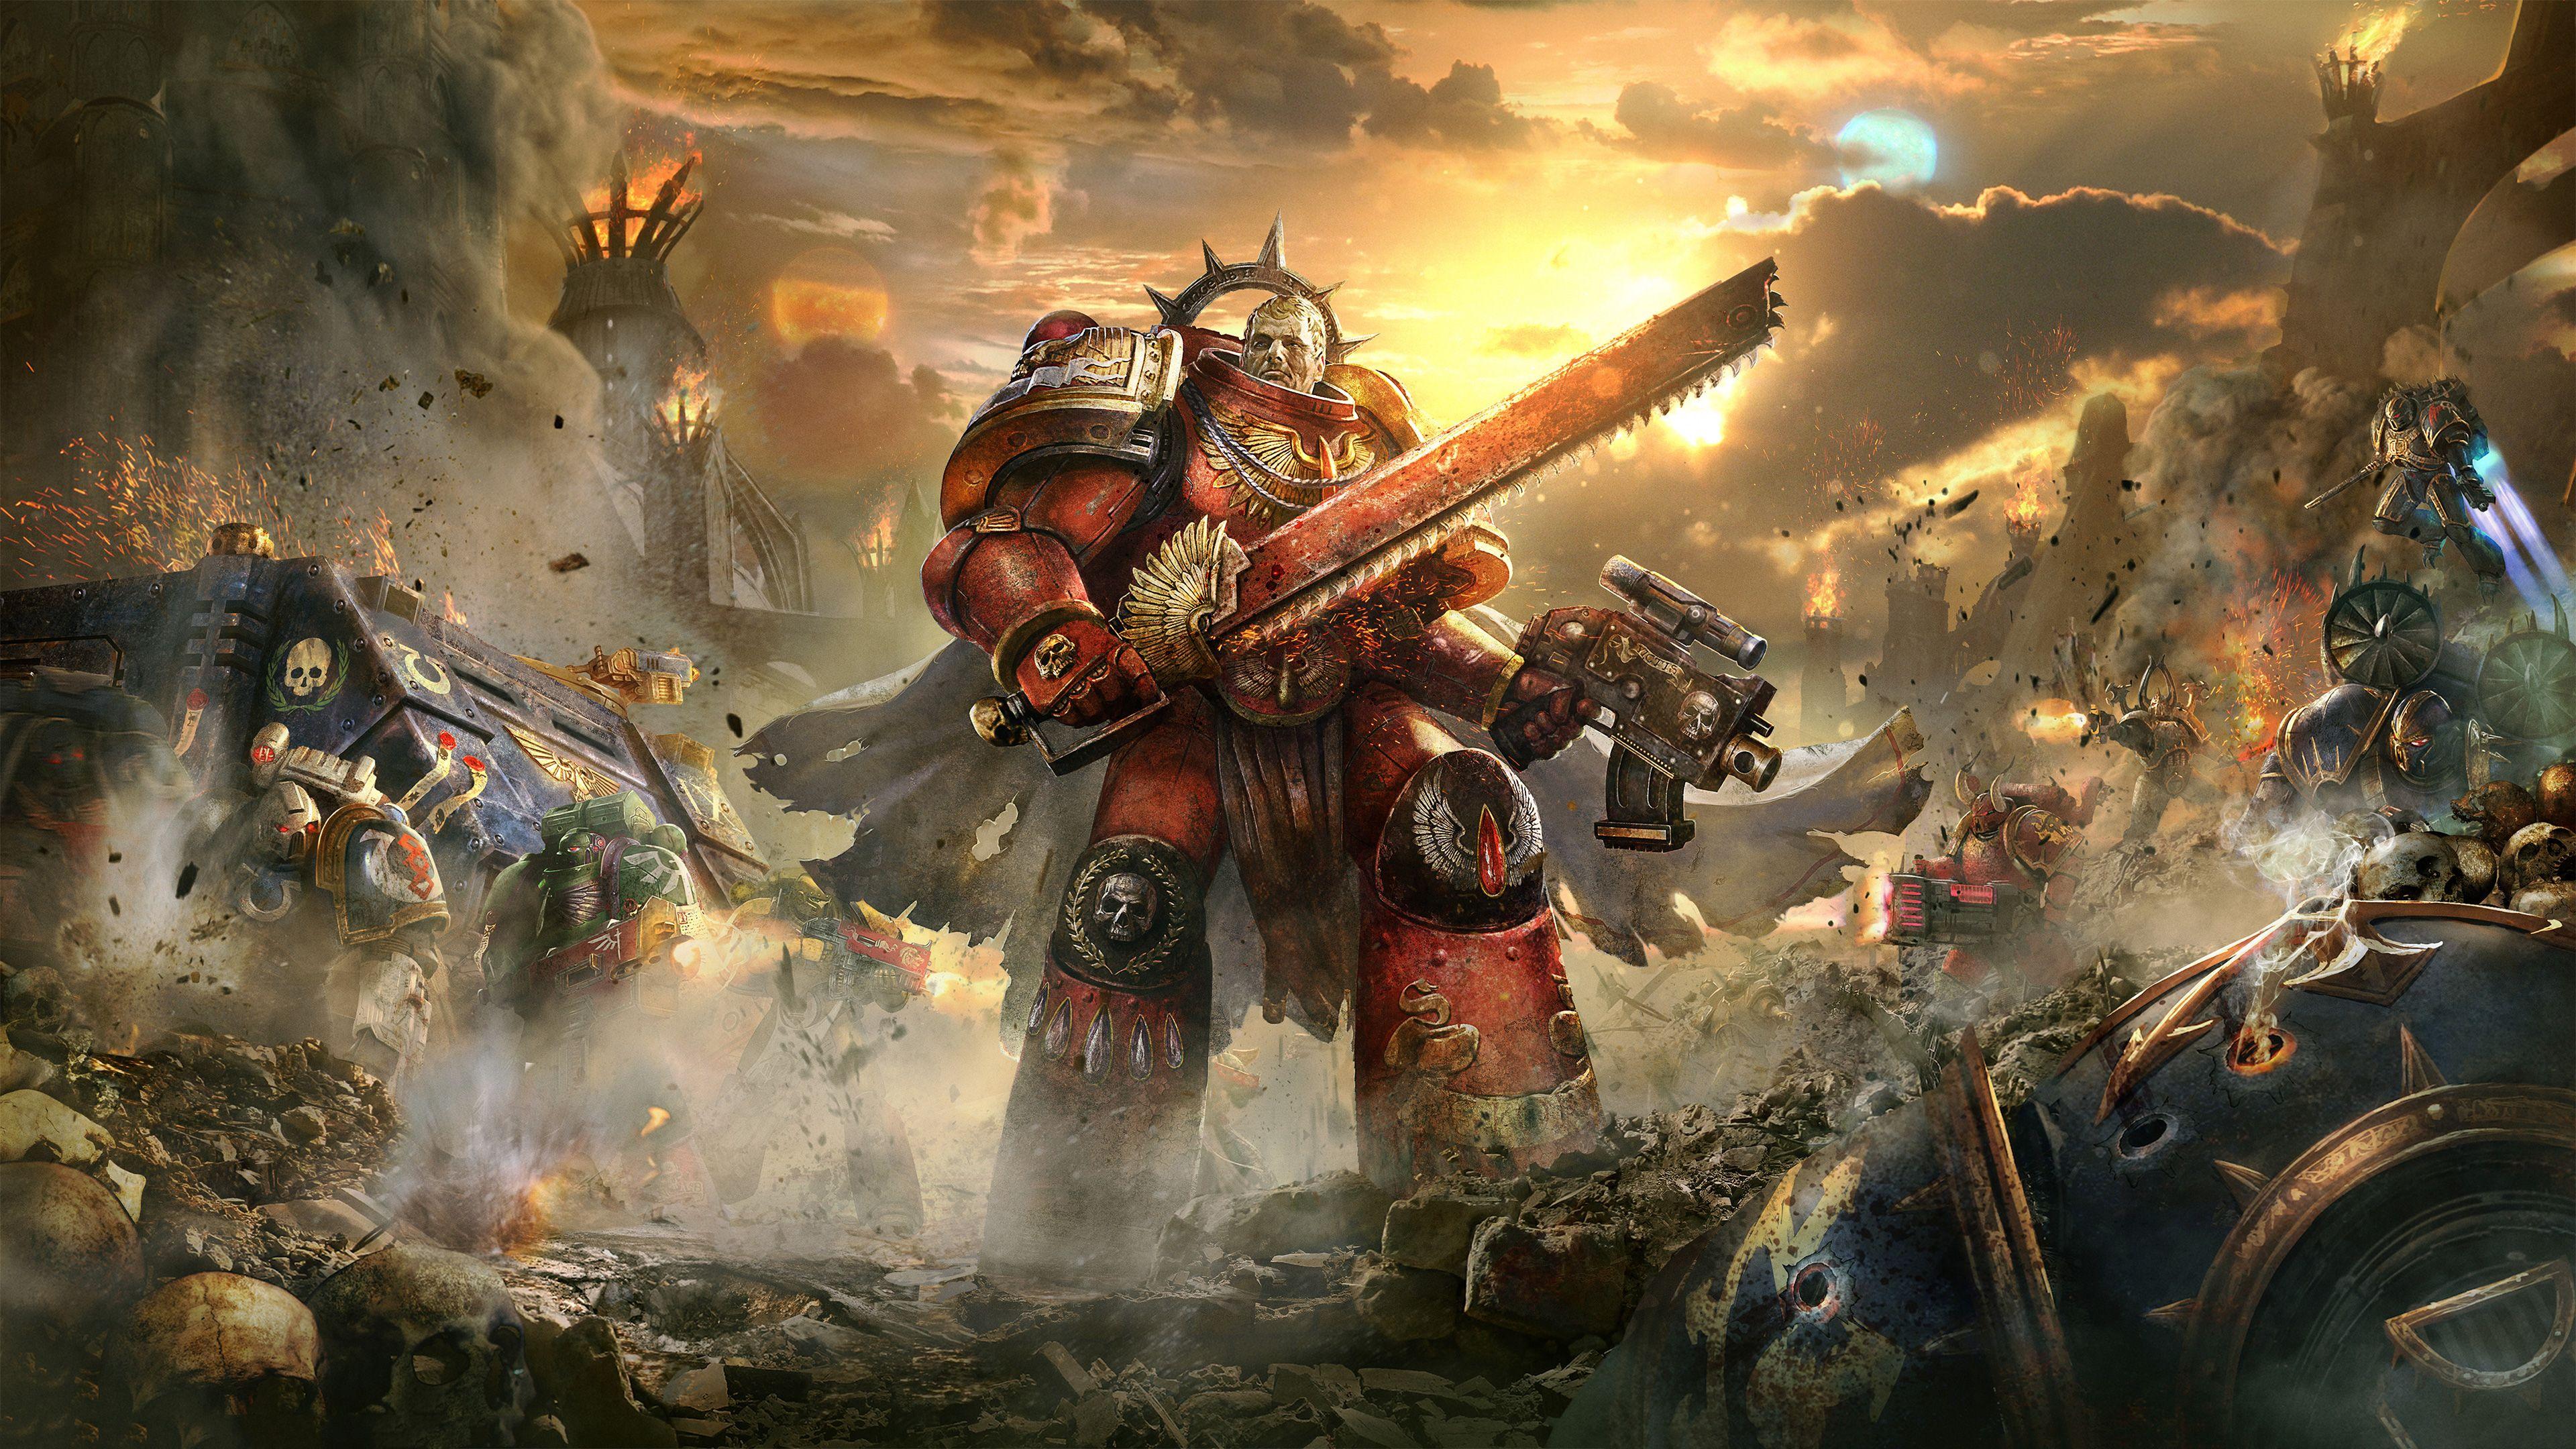 1440p Total War Warhammer 2 Wallpaper - wallpaper game over